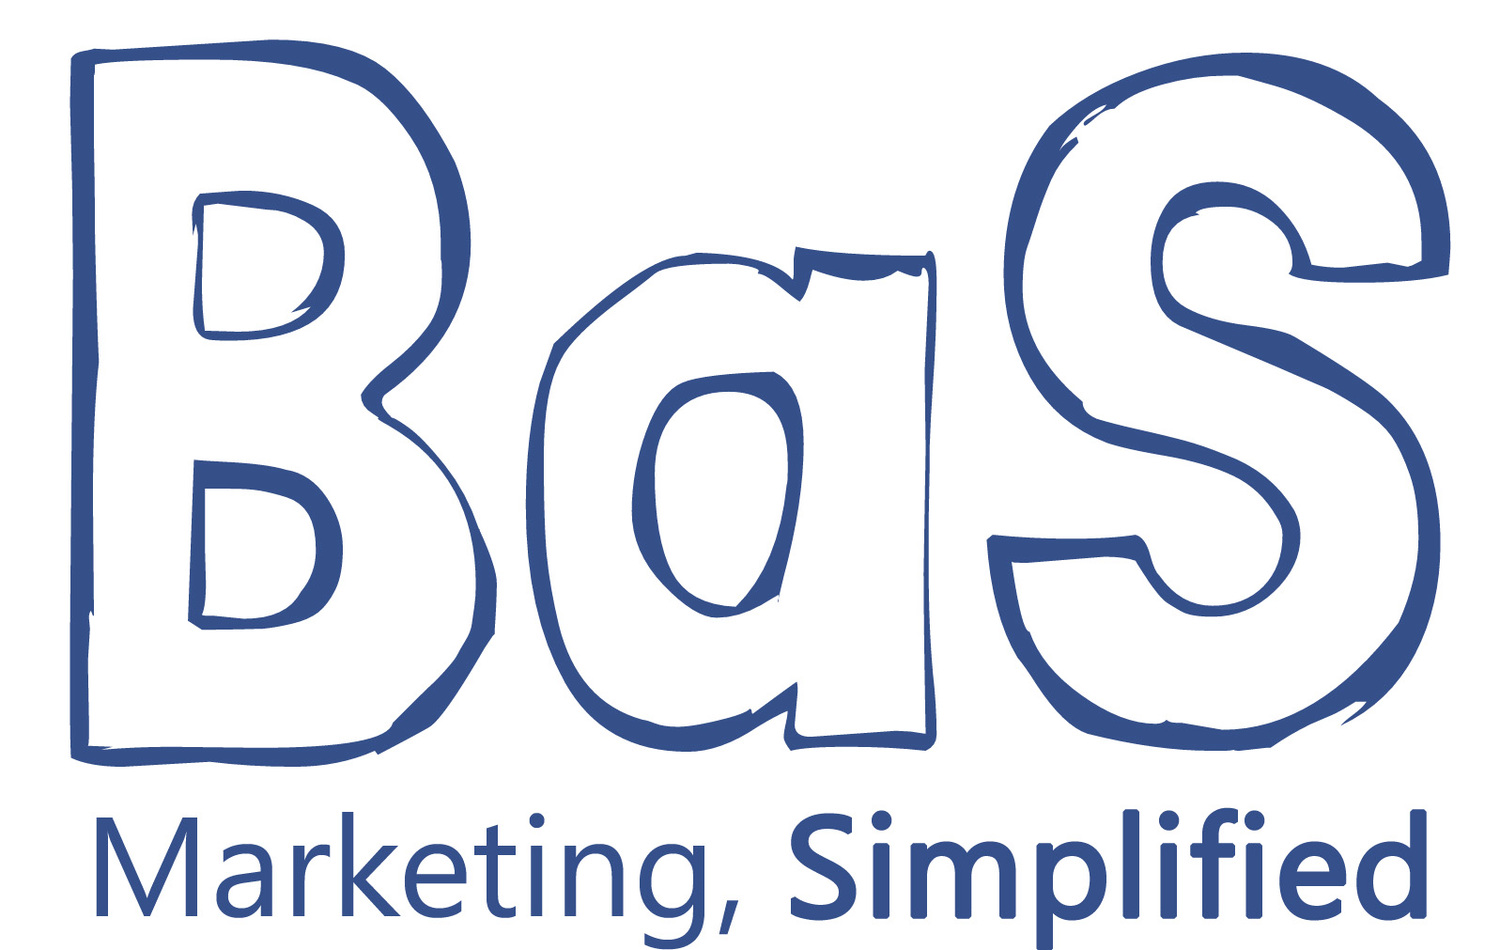 BaS Marketing